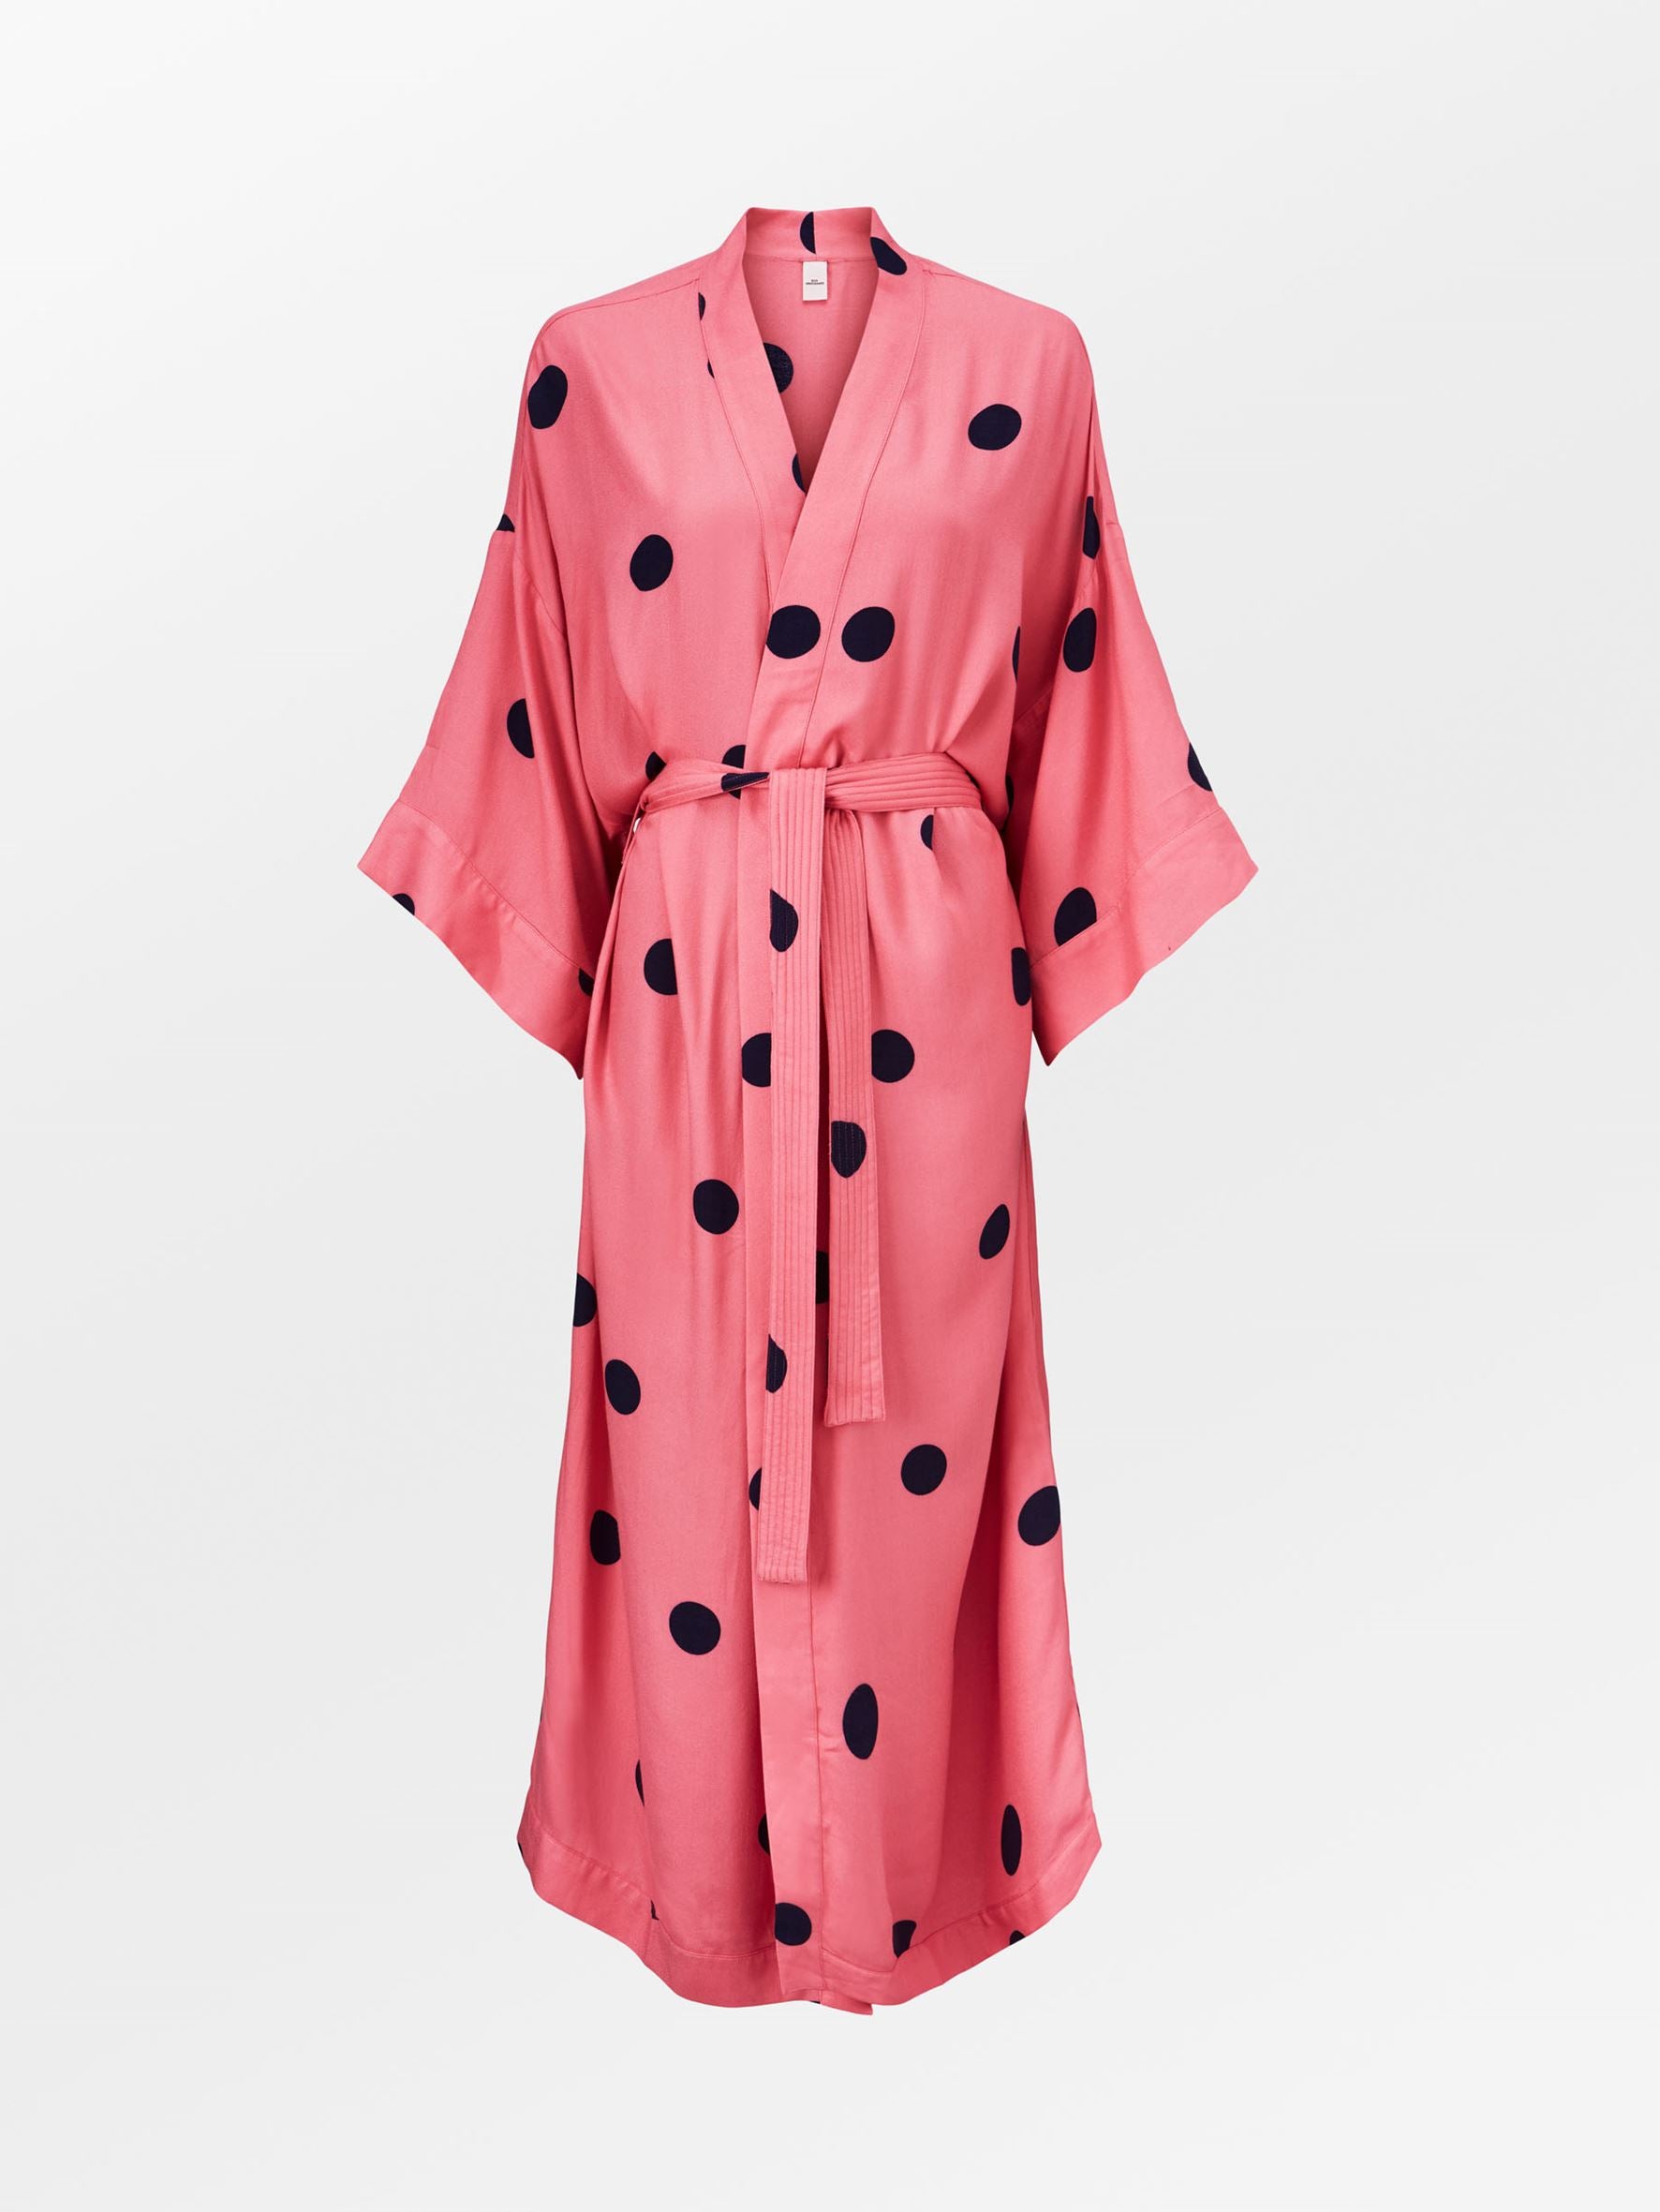 Becksöndergaard, Deimos Long Kimono - Strawberry Pink, archive, sale, sale, sale, archive, sale